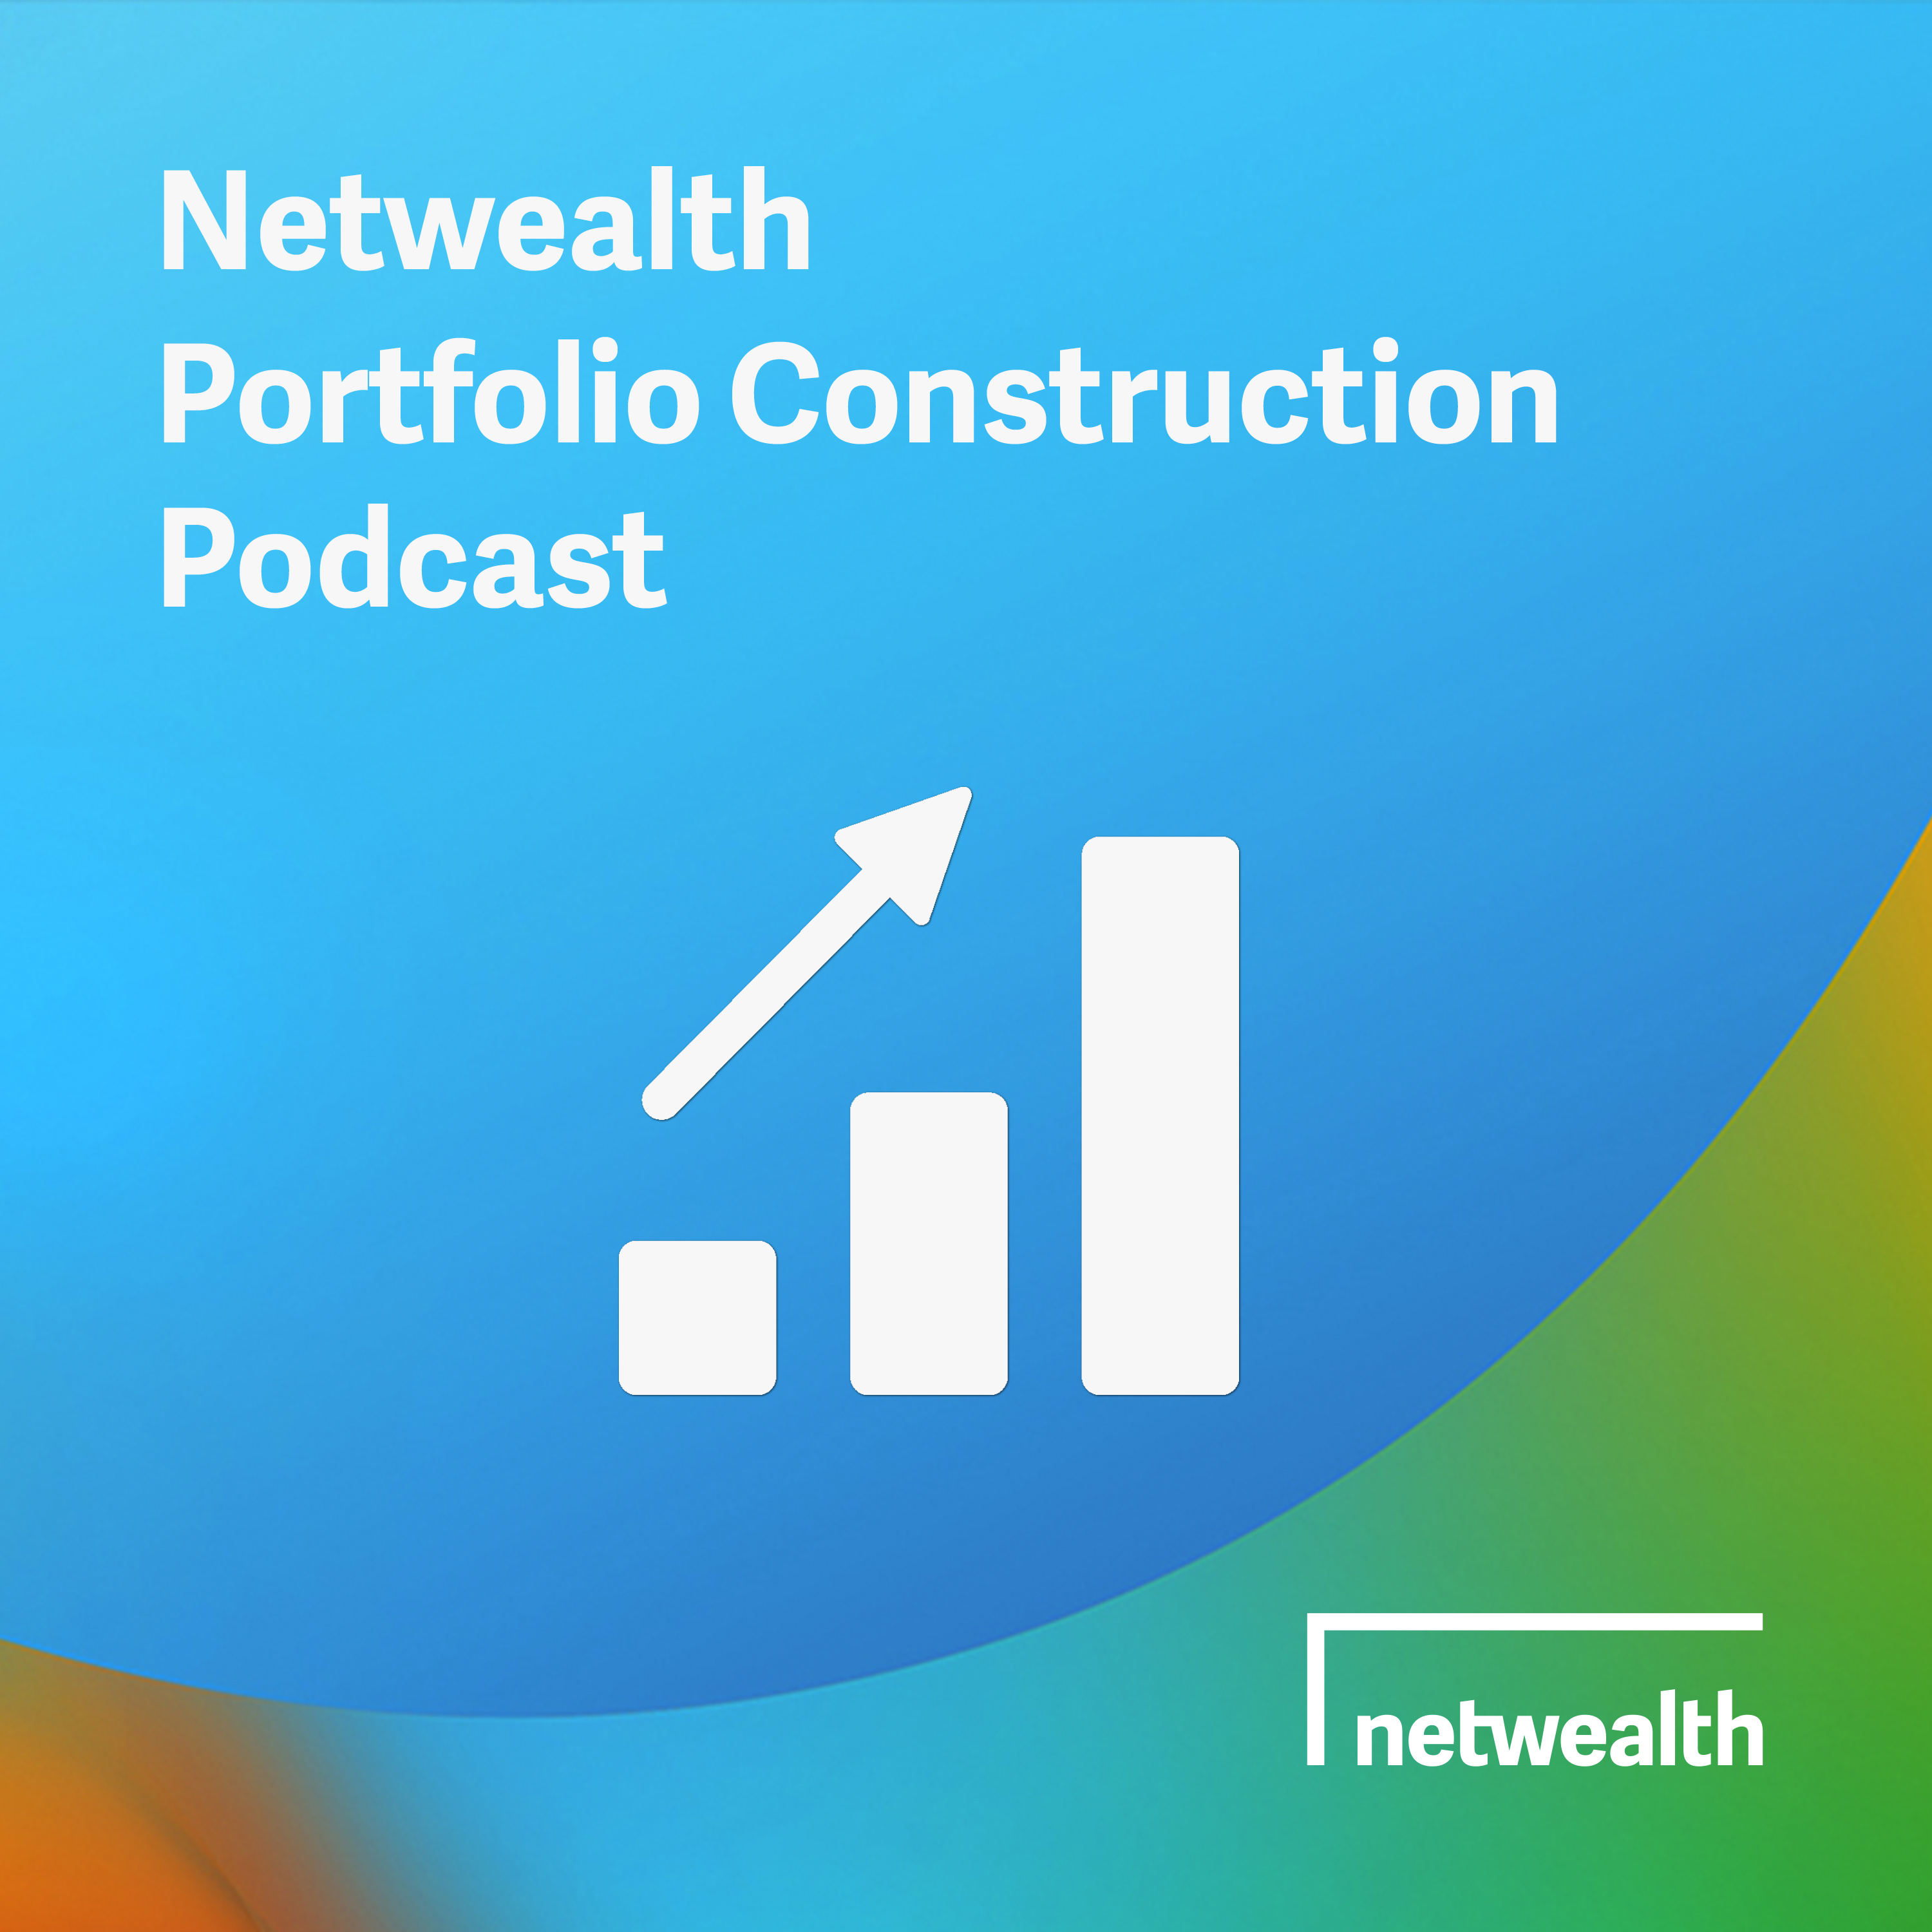 The Netwealth Portfolio Construction Podcast